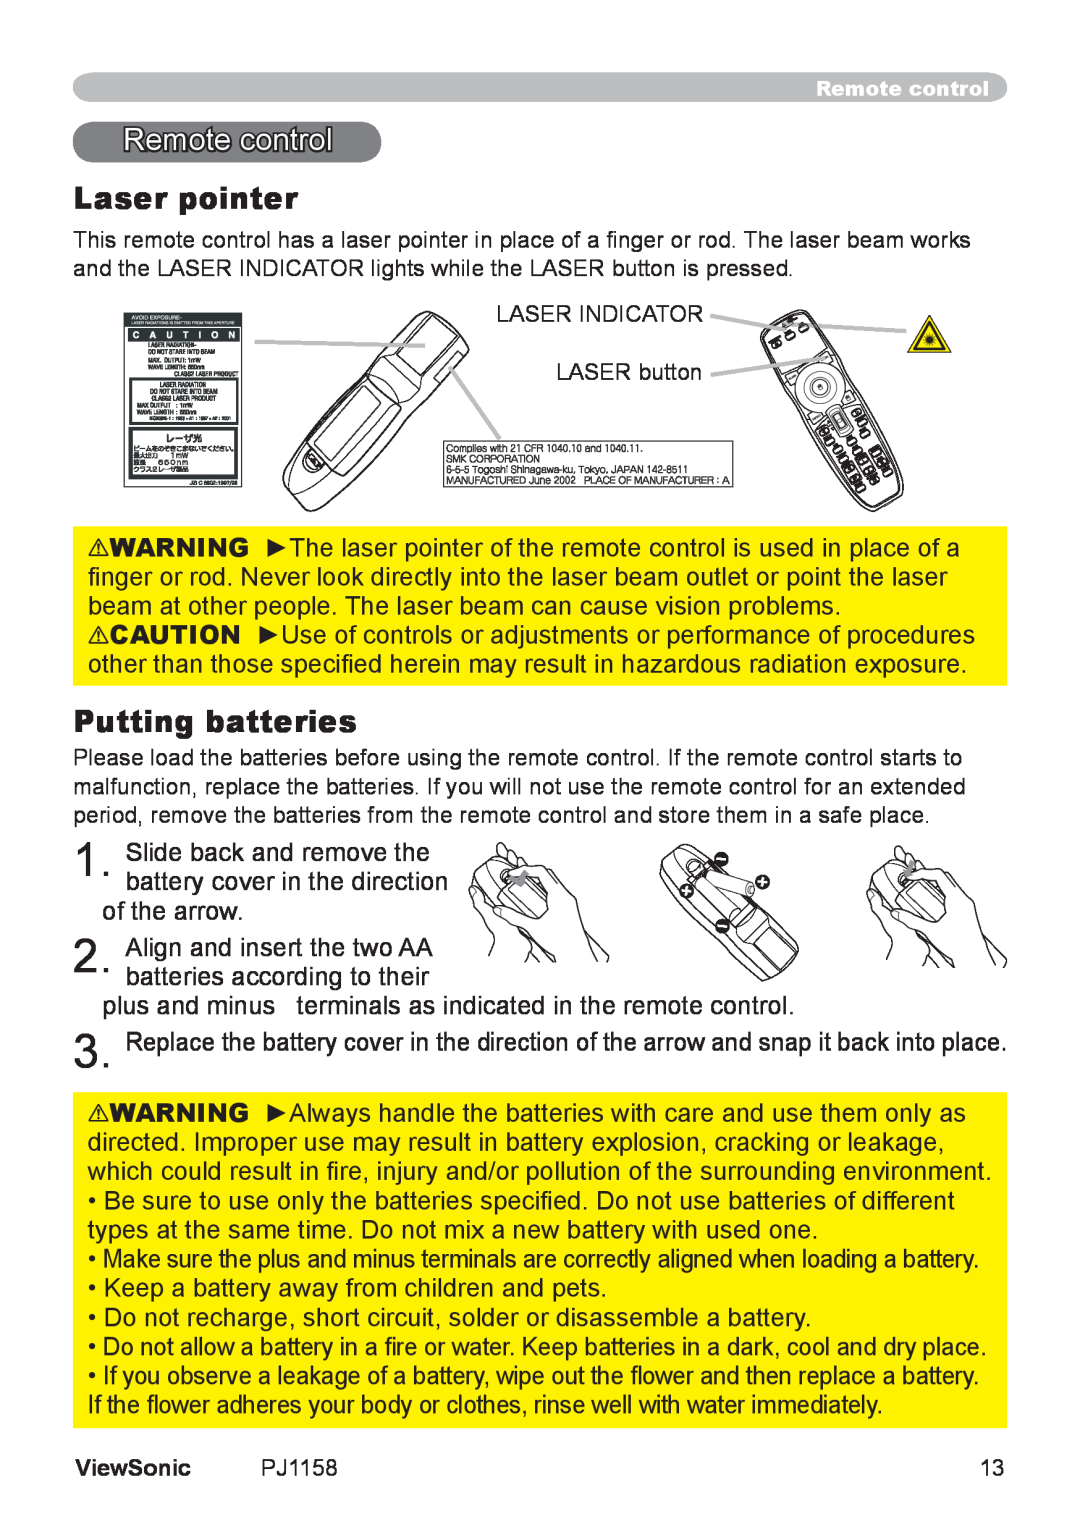 ViewSonic PJ1158 manual Remote control, Laser pointer, Putting batteries 